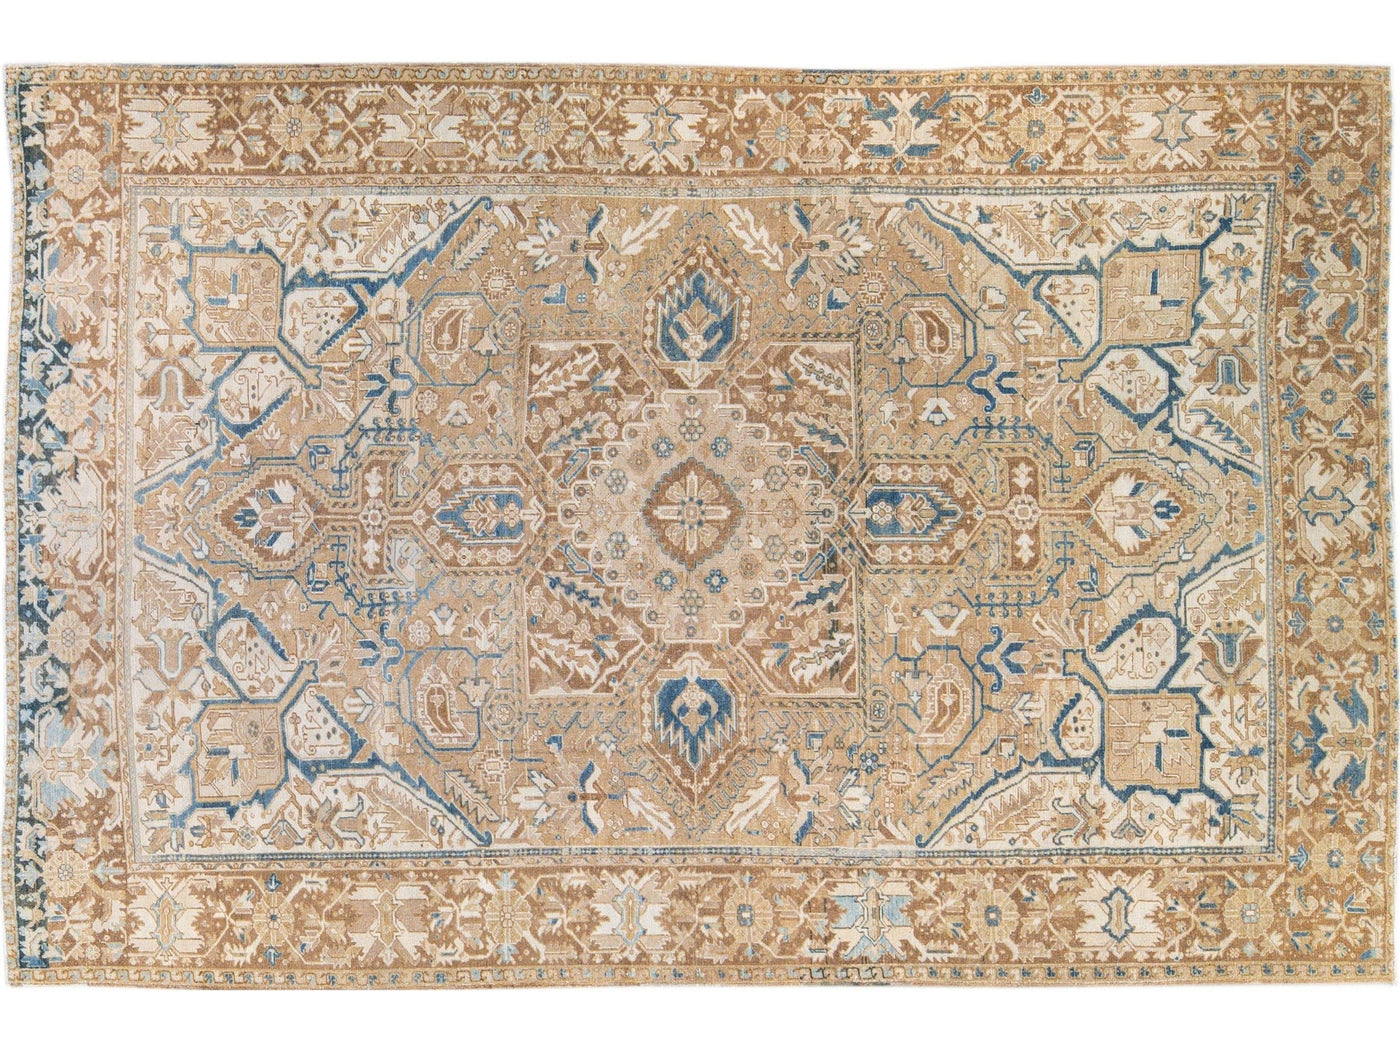 Antique Persian Heriz Handmade Medallion Tan and Blue Wool Rug